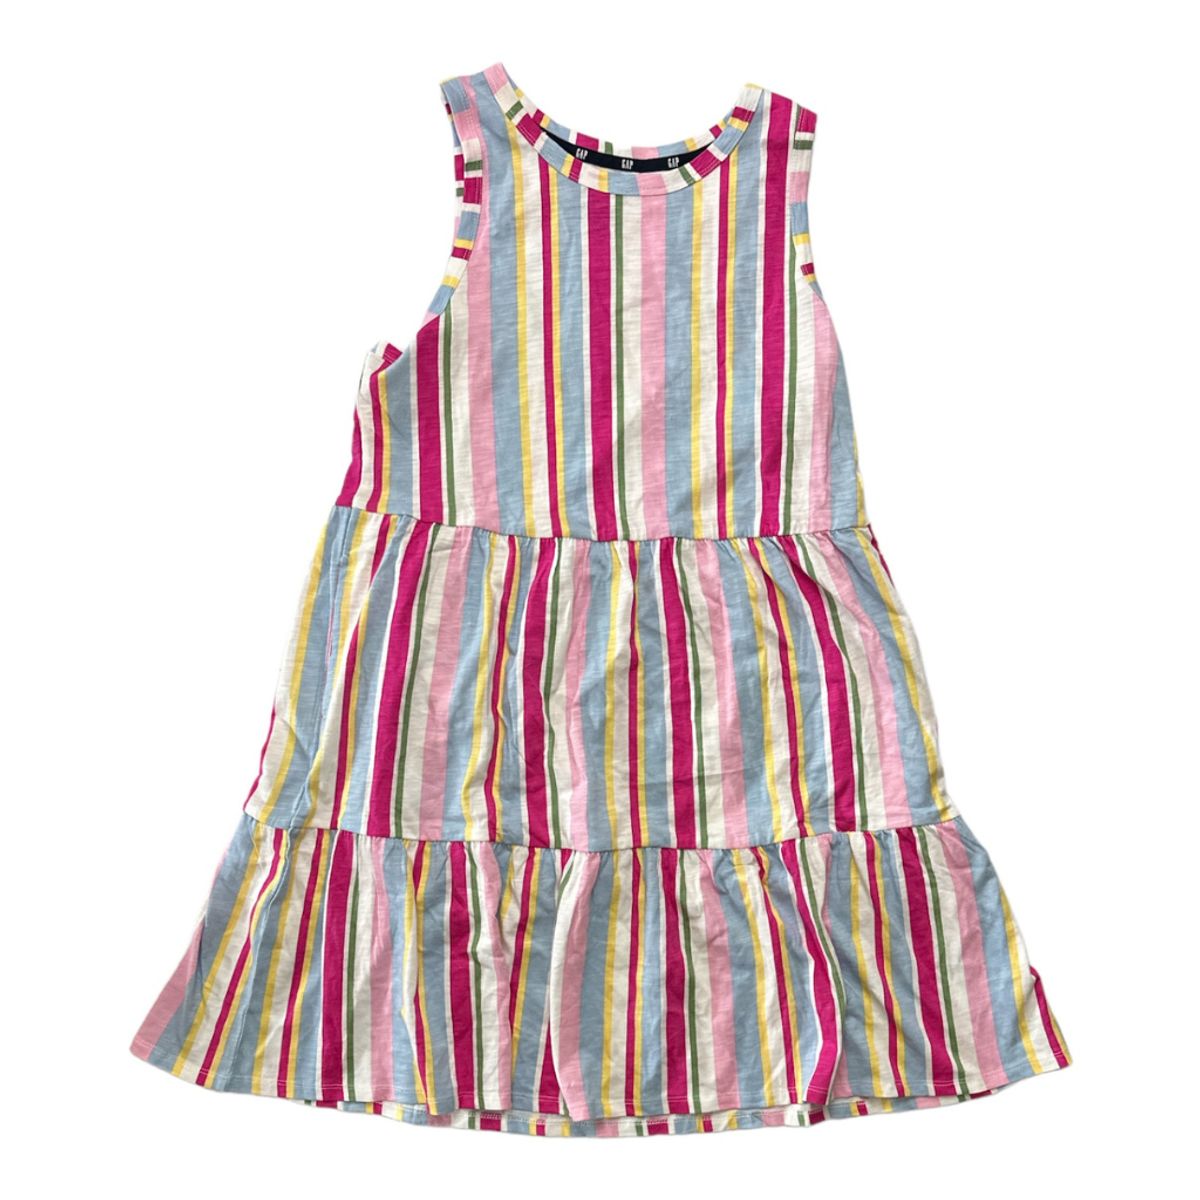 GAP Women's Tiered Summer Dress - Medium - Multicolor Stripe